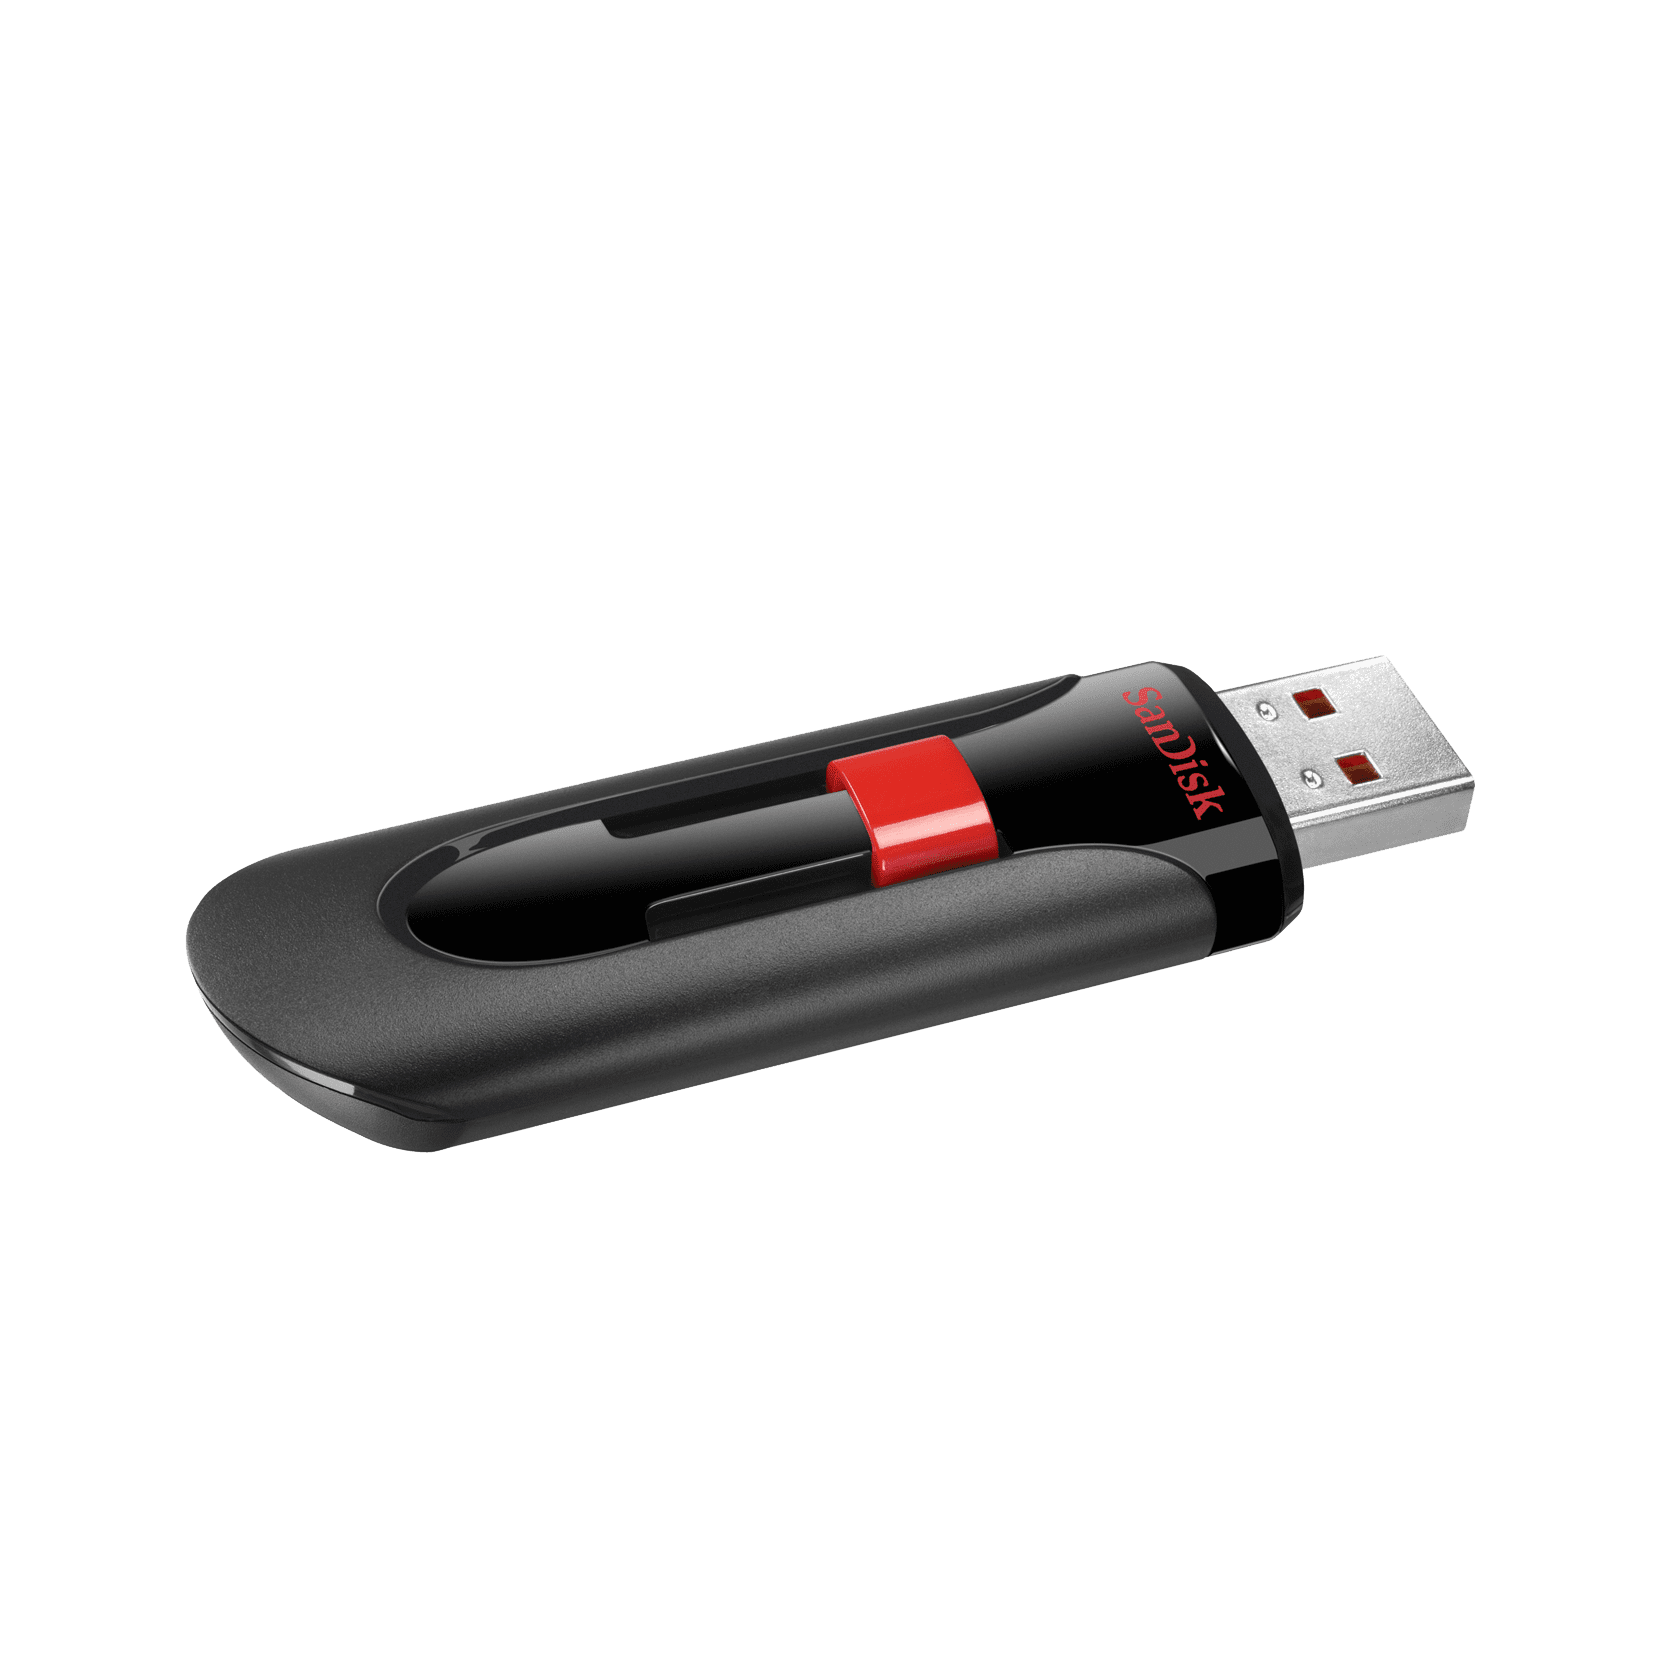 SanDisk サンディスク USBメモリー 32GB Cruzer Glide USB3.0対応 超高速 [並行輸入品] 人気の春夏